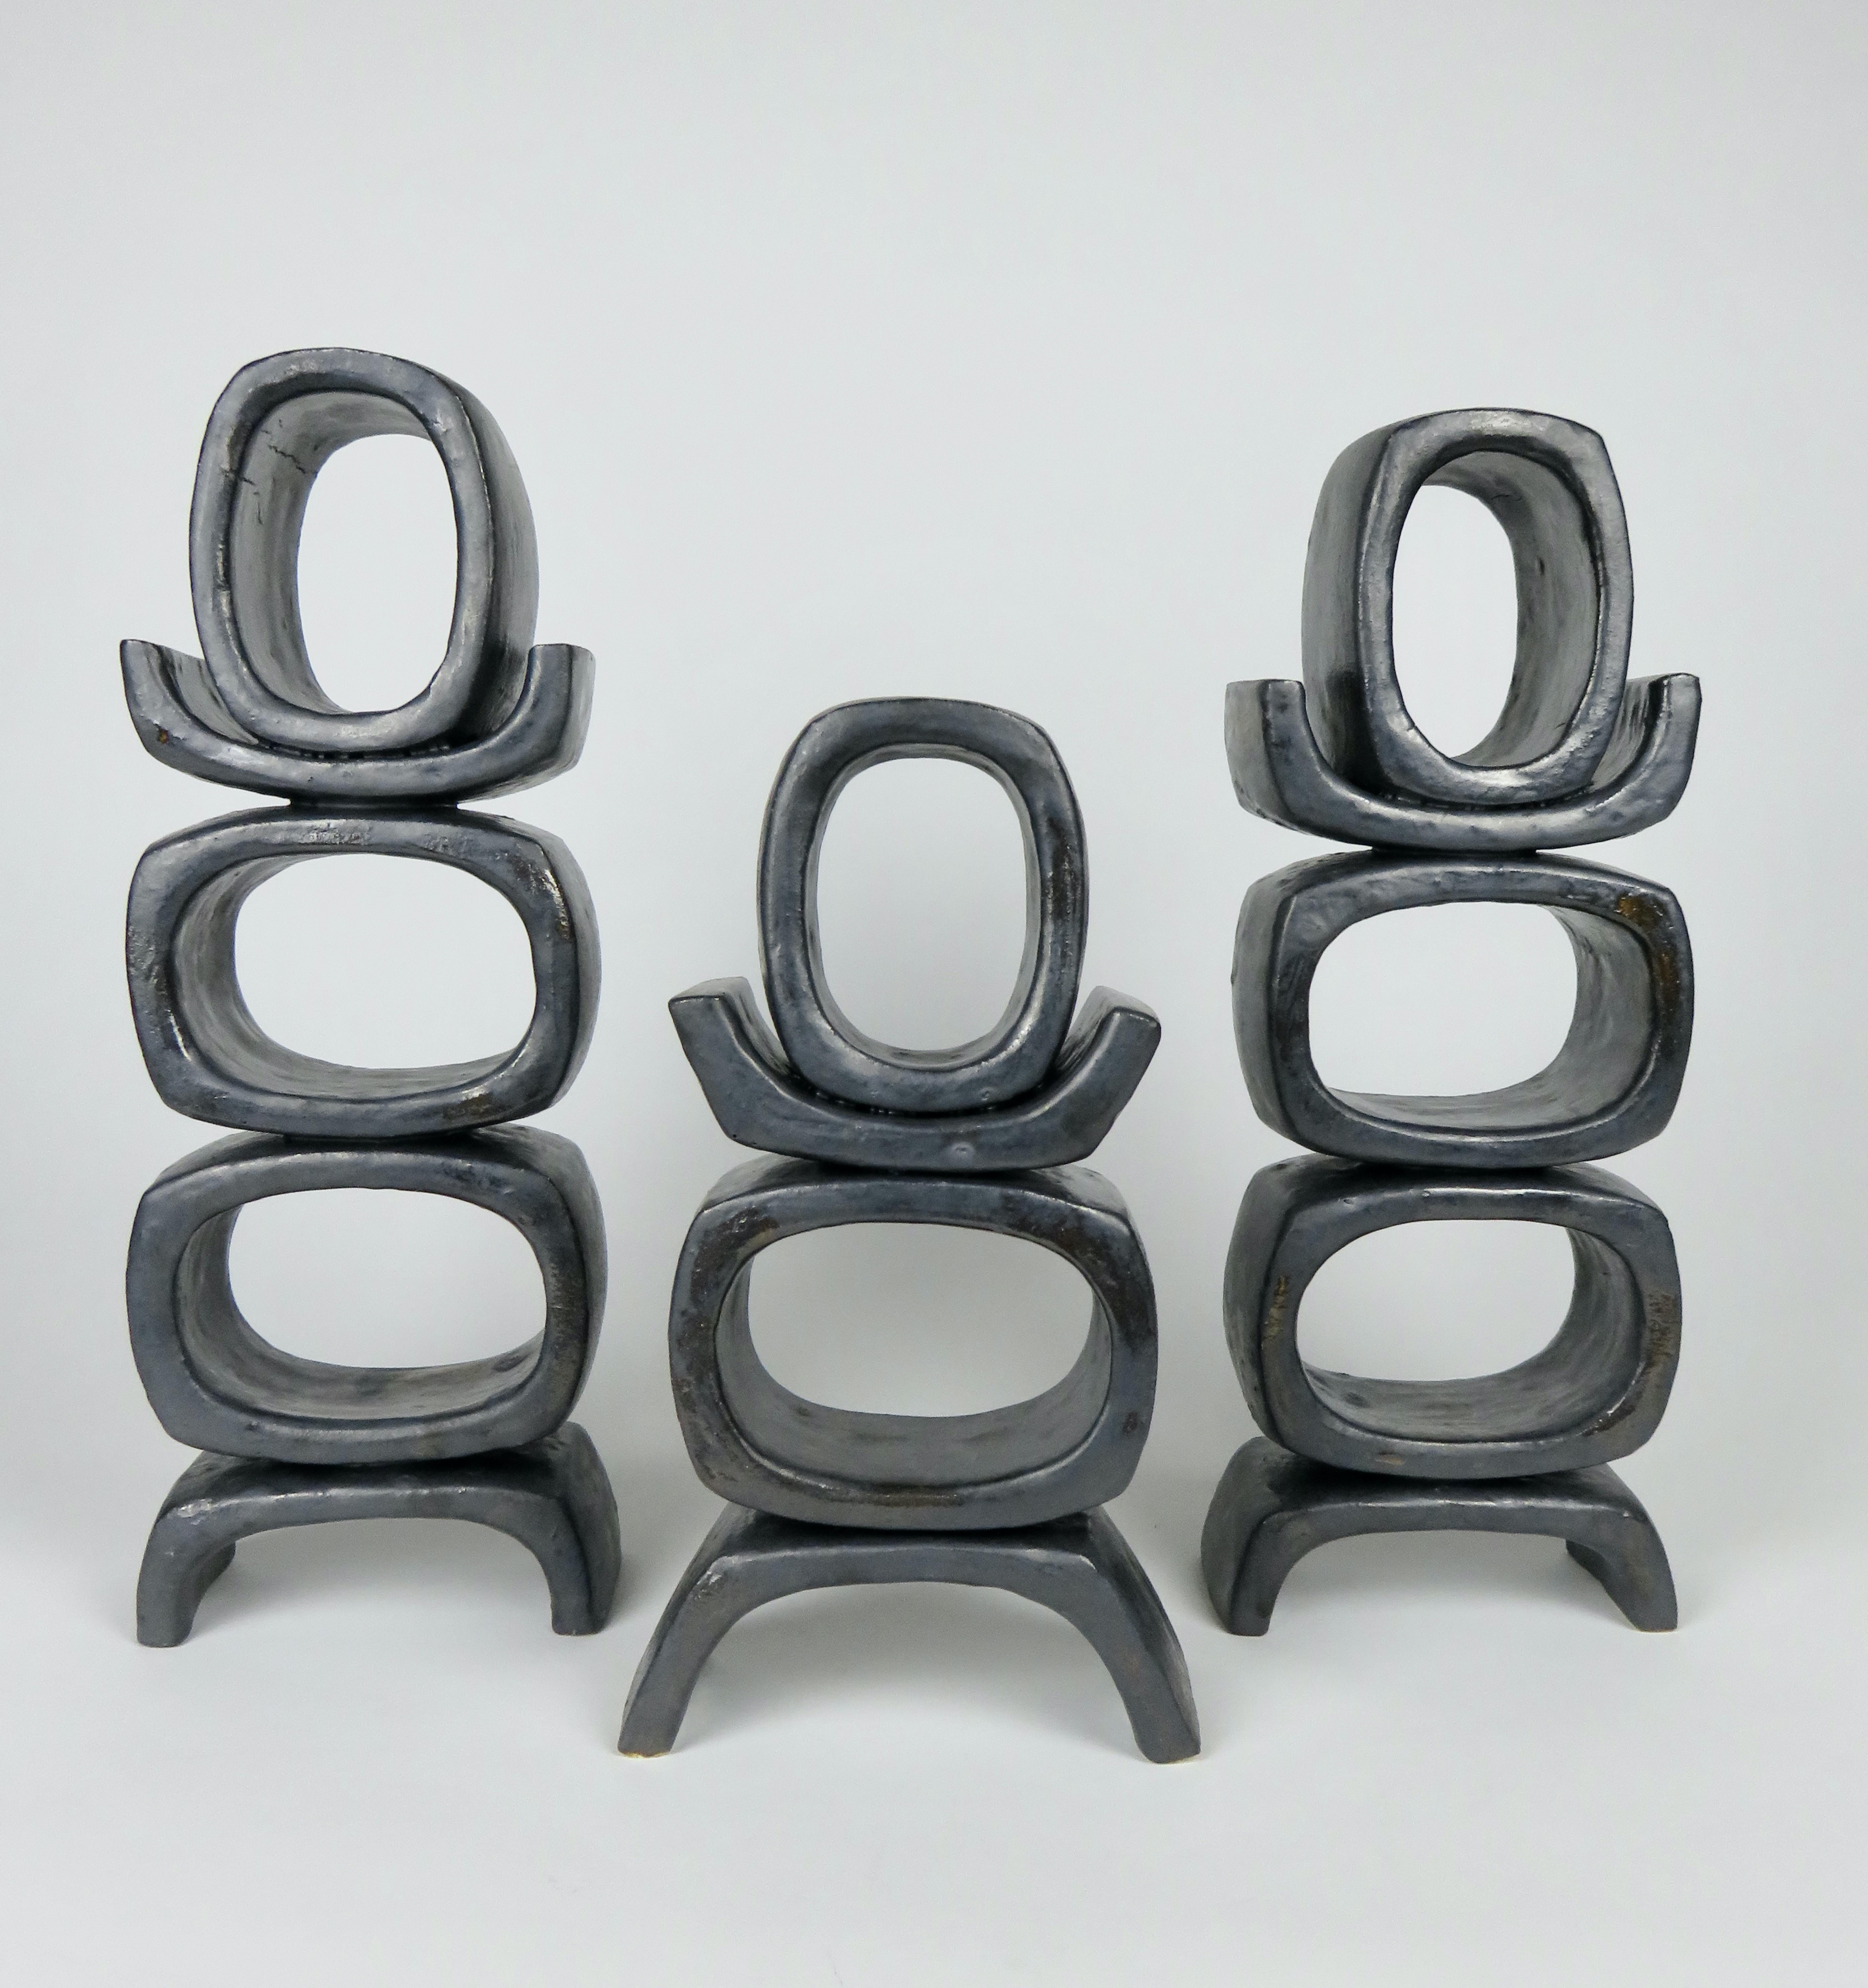 3 Rectangular Ovals, Short Angled Legs, Metallic Black-Glazed Clay Sculpture #1 8